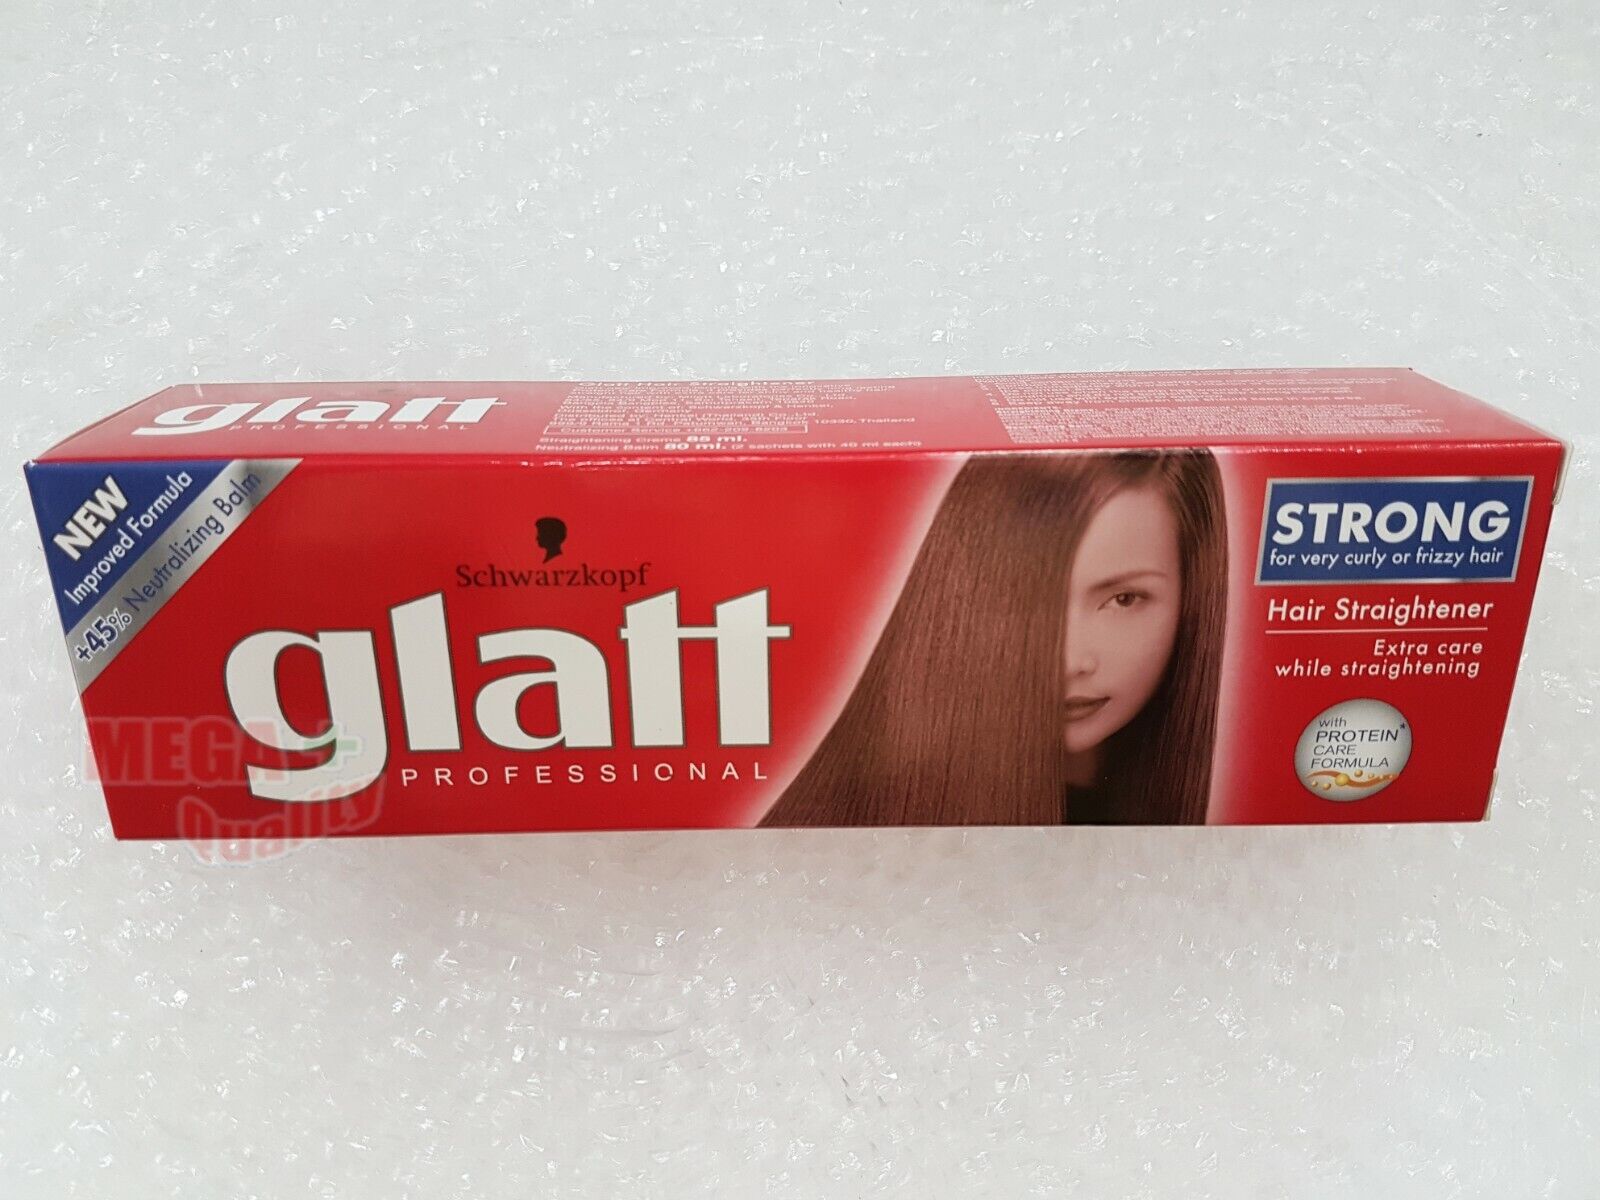 Glatt Professional Schwarzkopf Hair Straightener Cream Strong Formula Curly  Hair | eBay